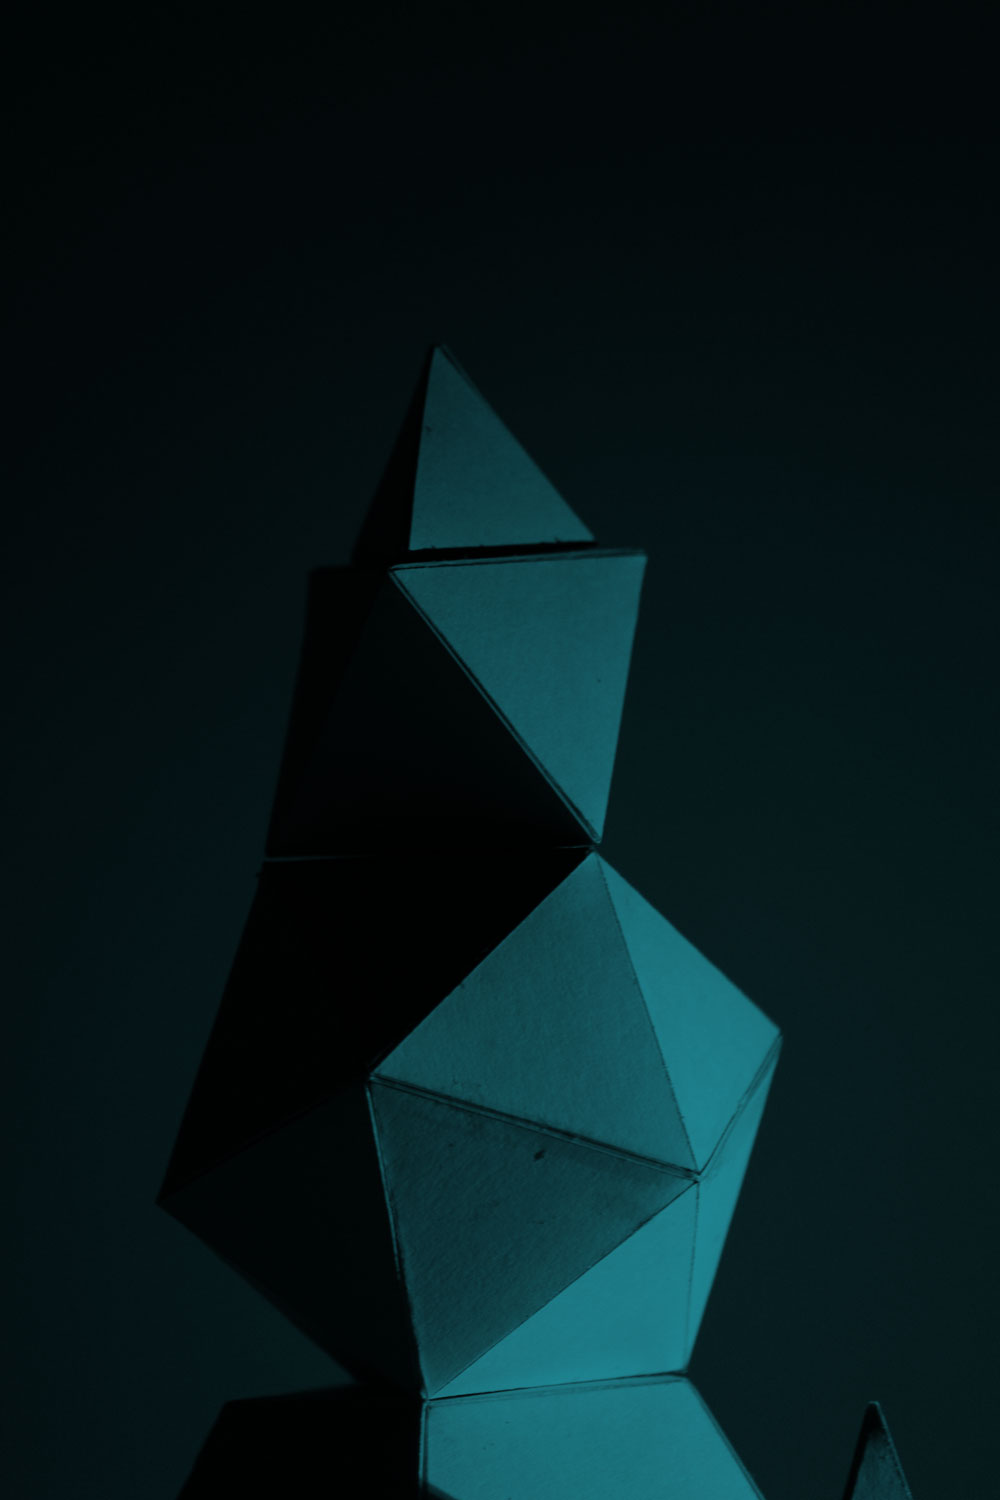 blue tinted image of geometric shapes